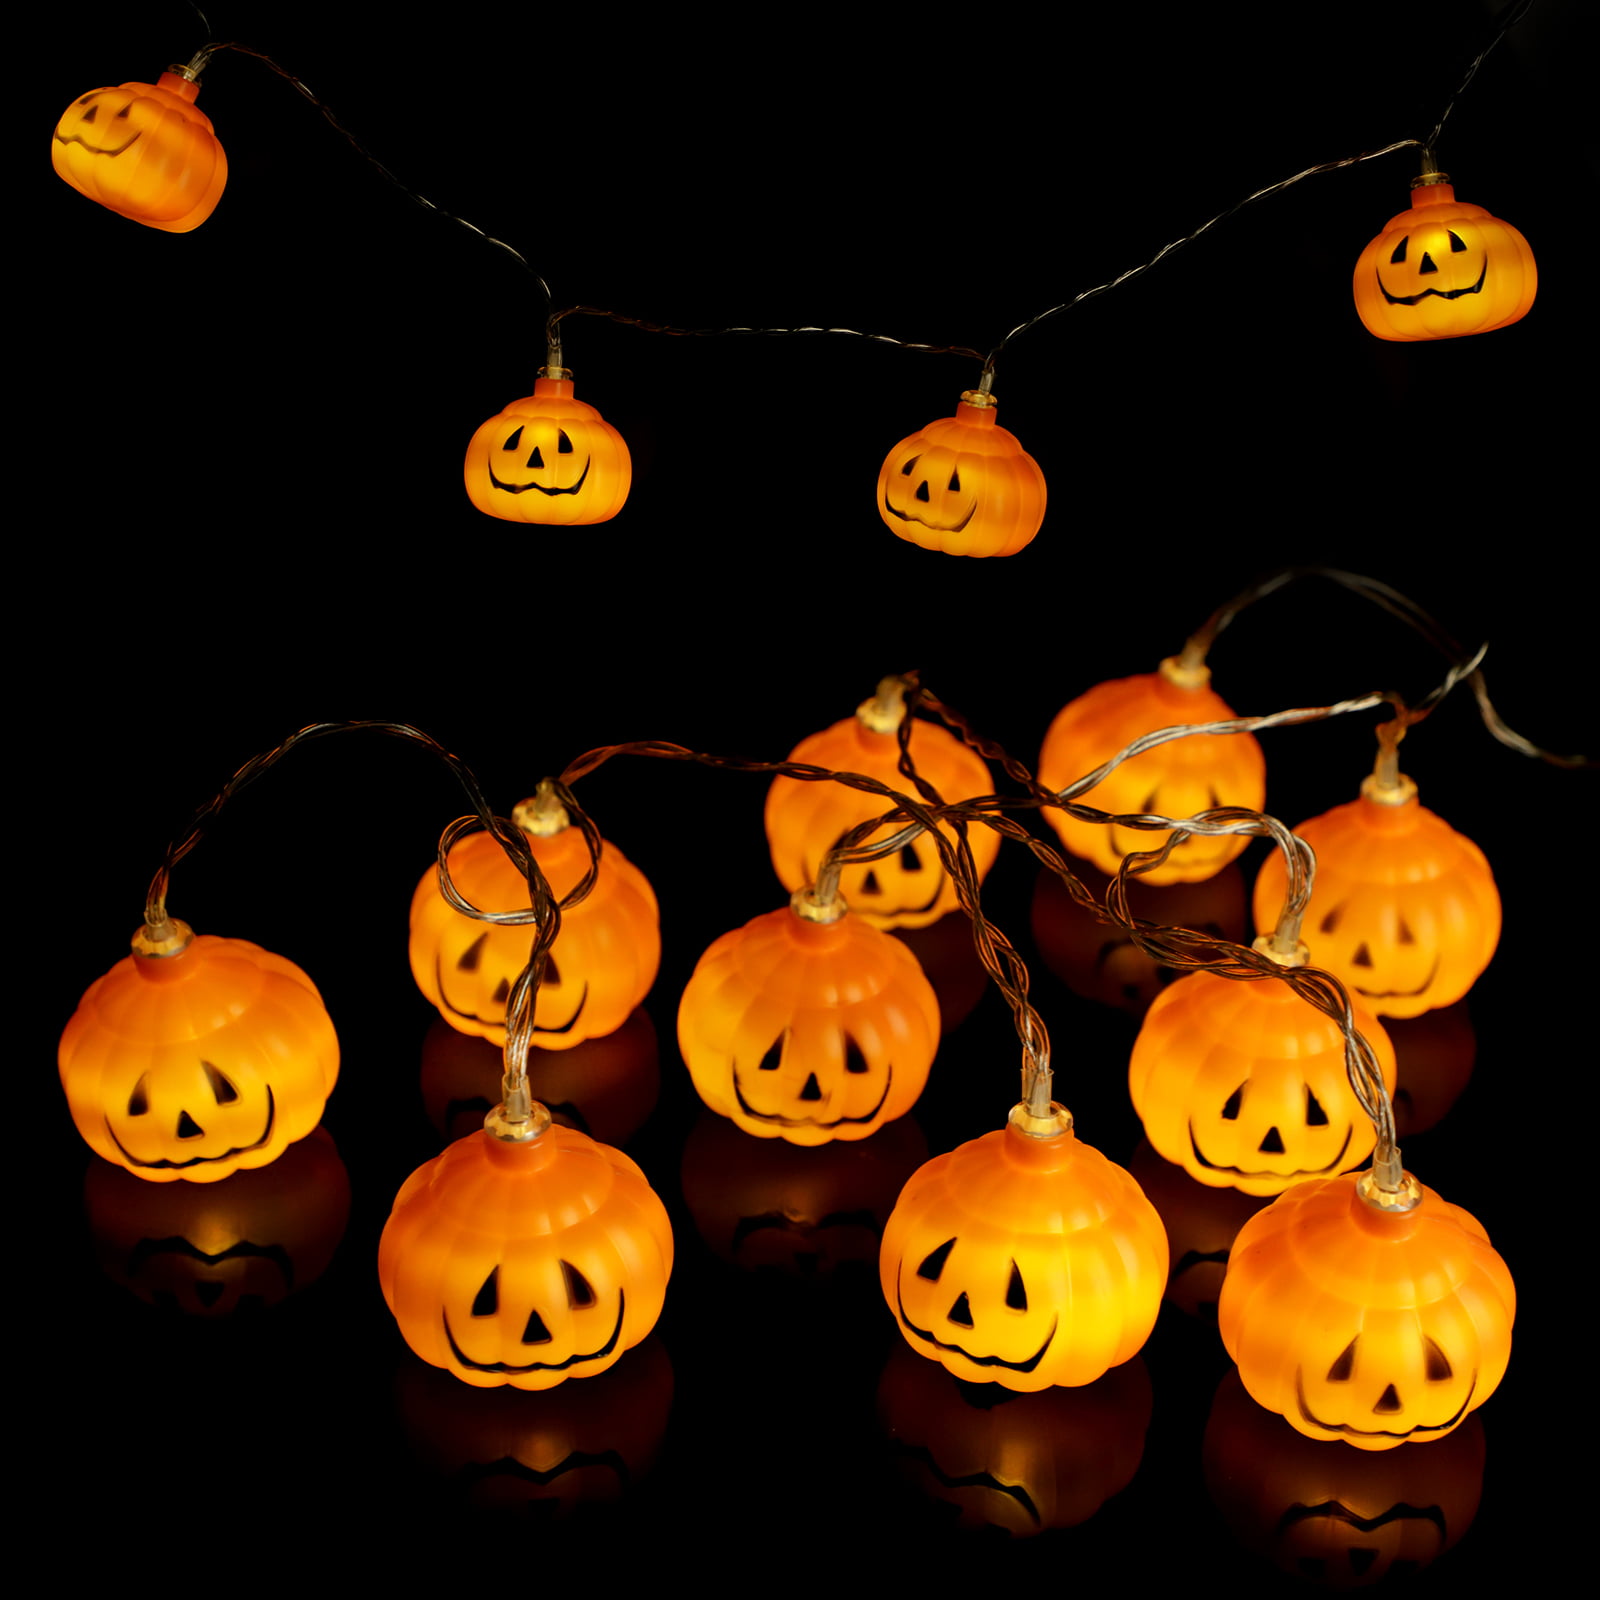 10 LED Pumpkin String Lights Lantern Lamp Home Halloween Decors Supplies US 